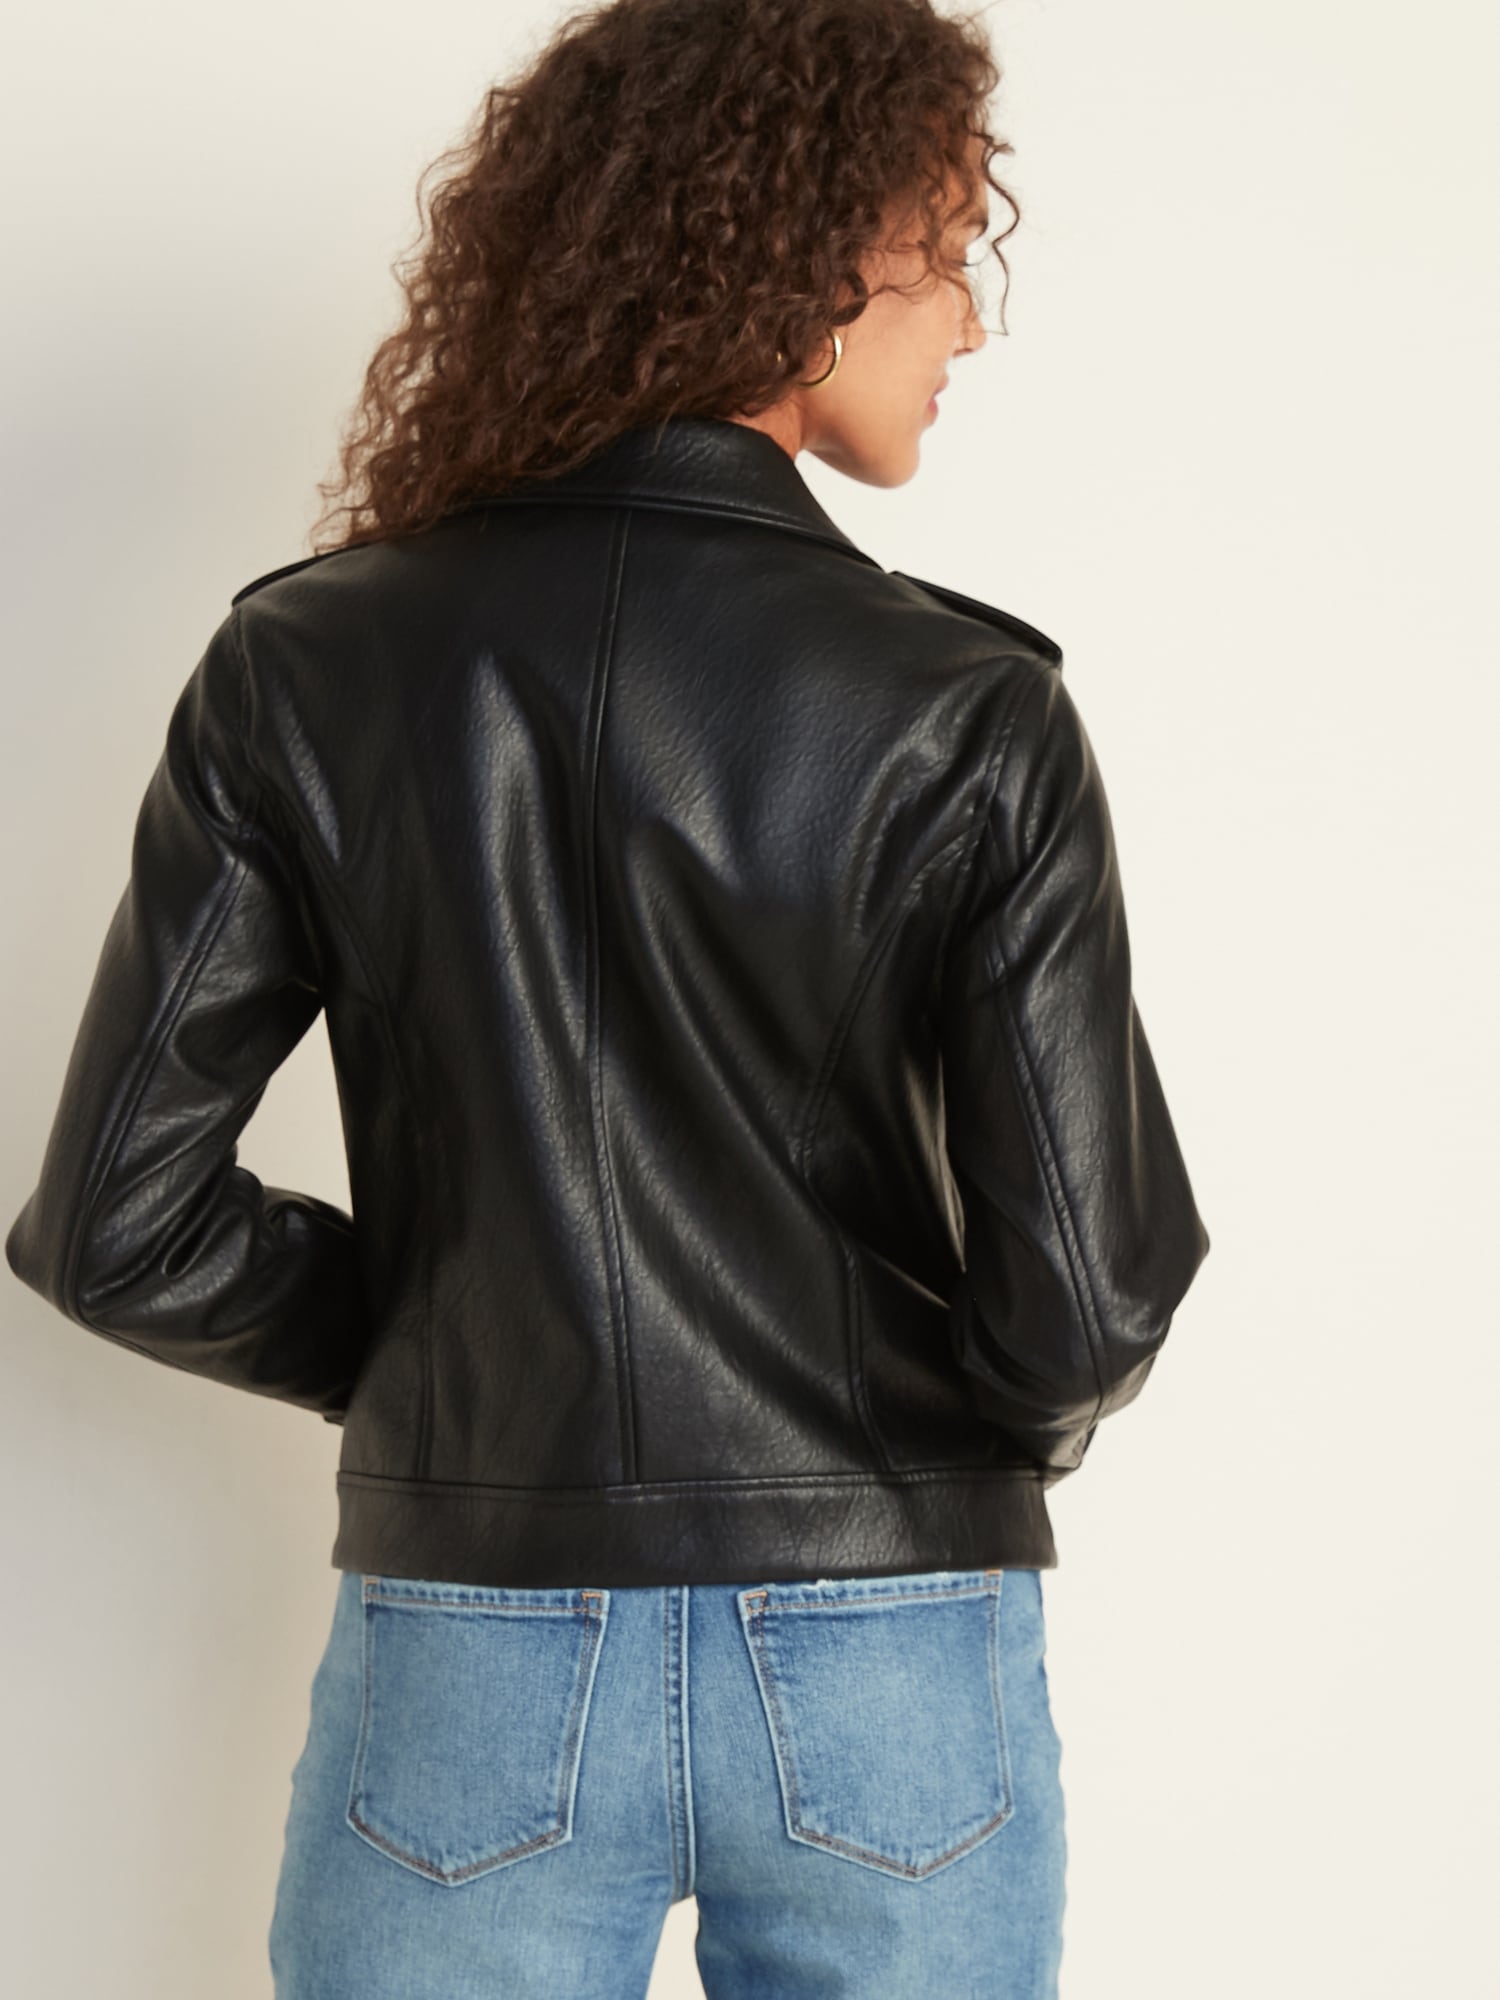 gap leather moto jacket women's